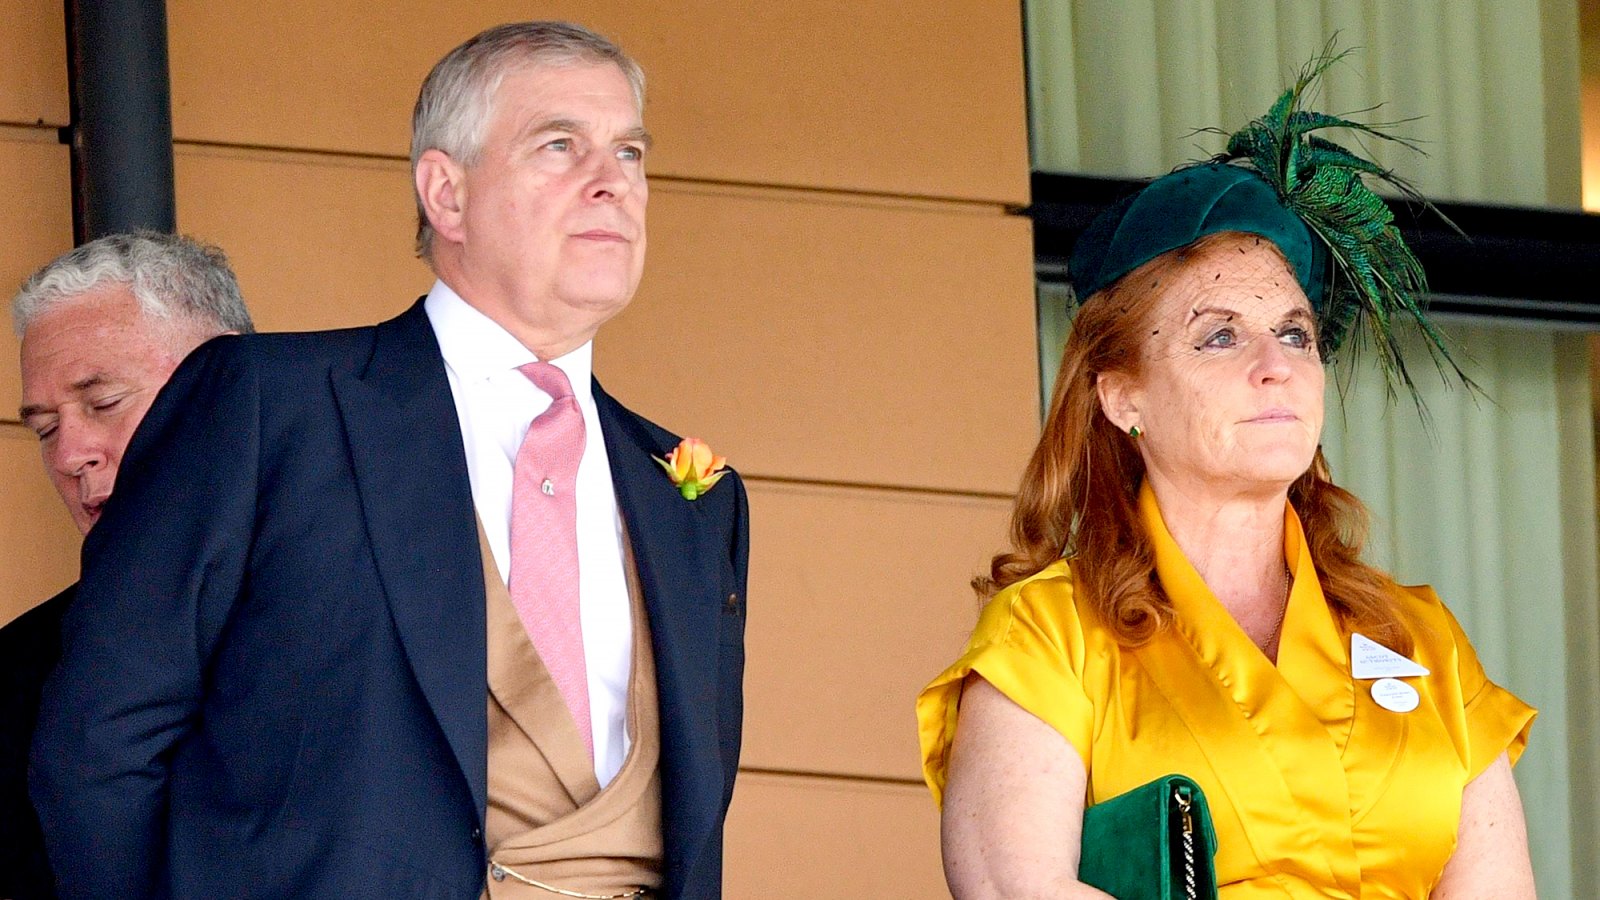 Prince Andrew Reunites With Ex Sarah Ferguson After Royal Step-Down